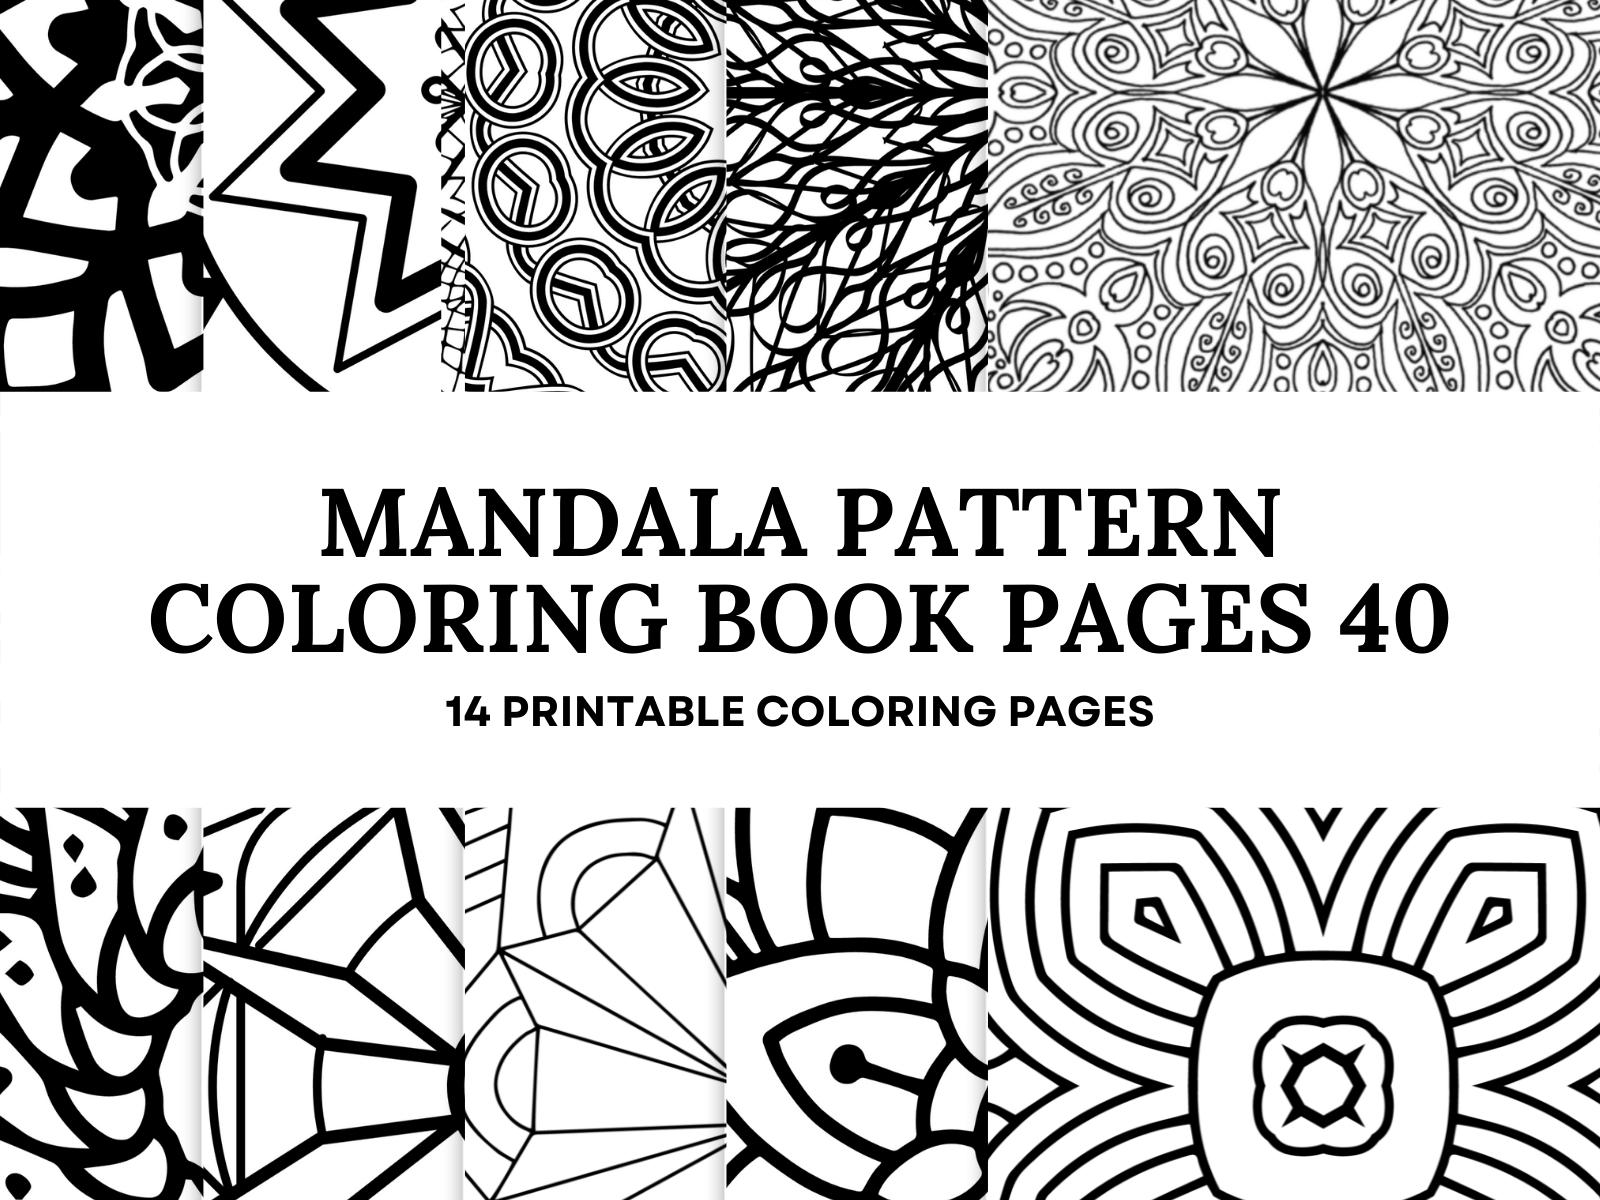 Mandala Pattern Coloring Book Pages 40